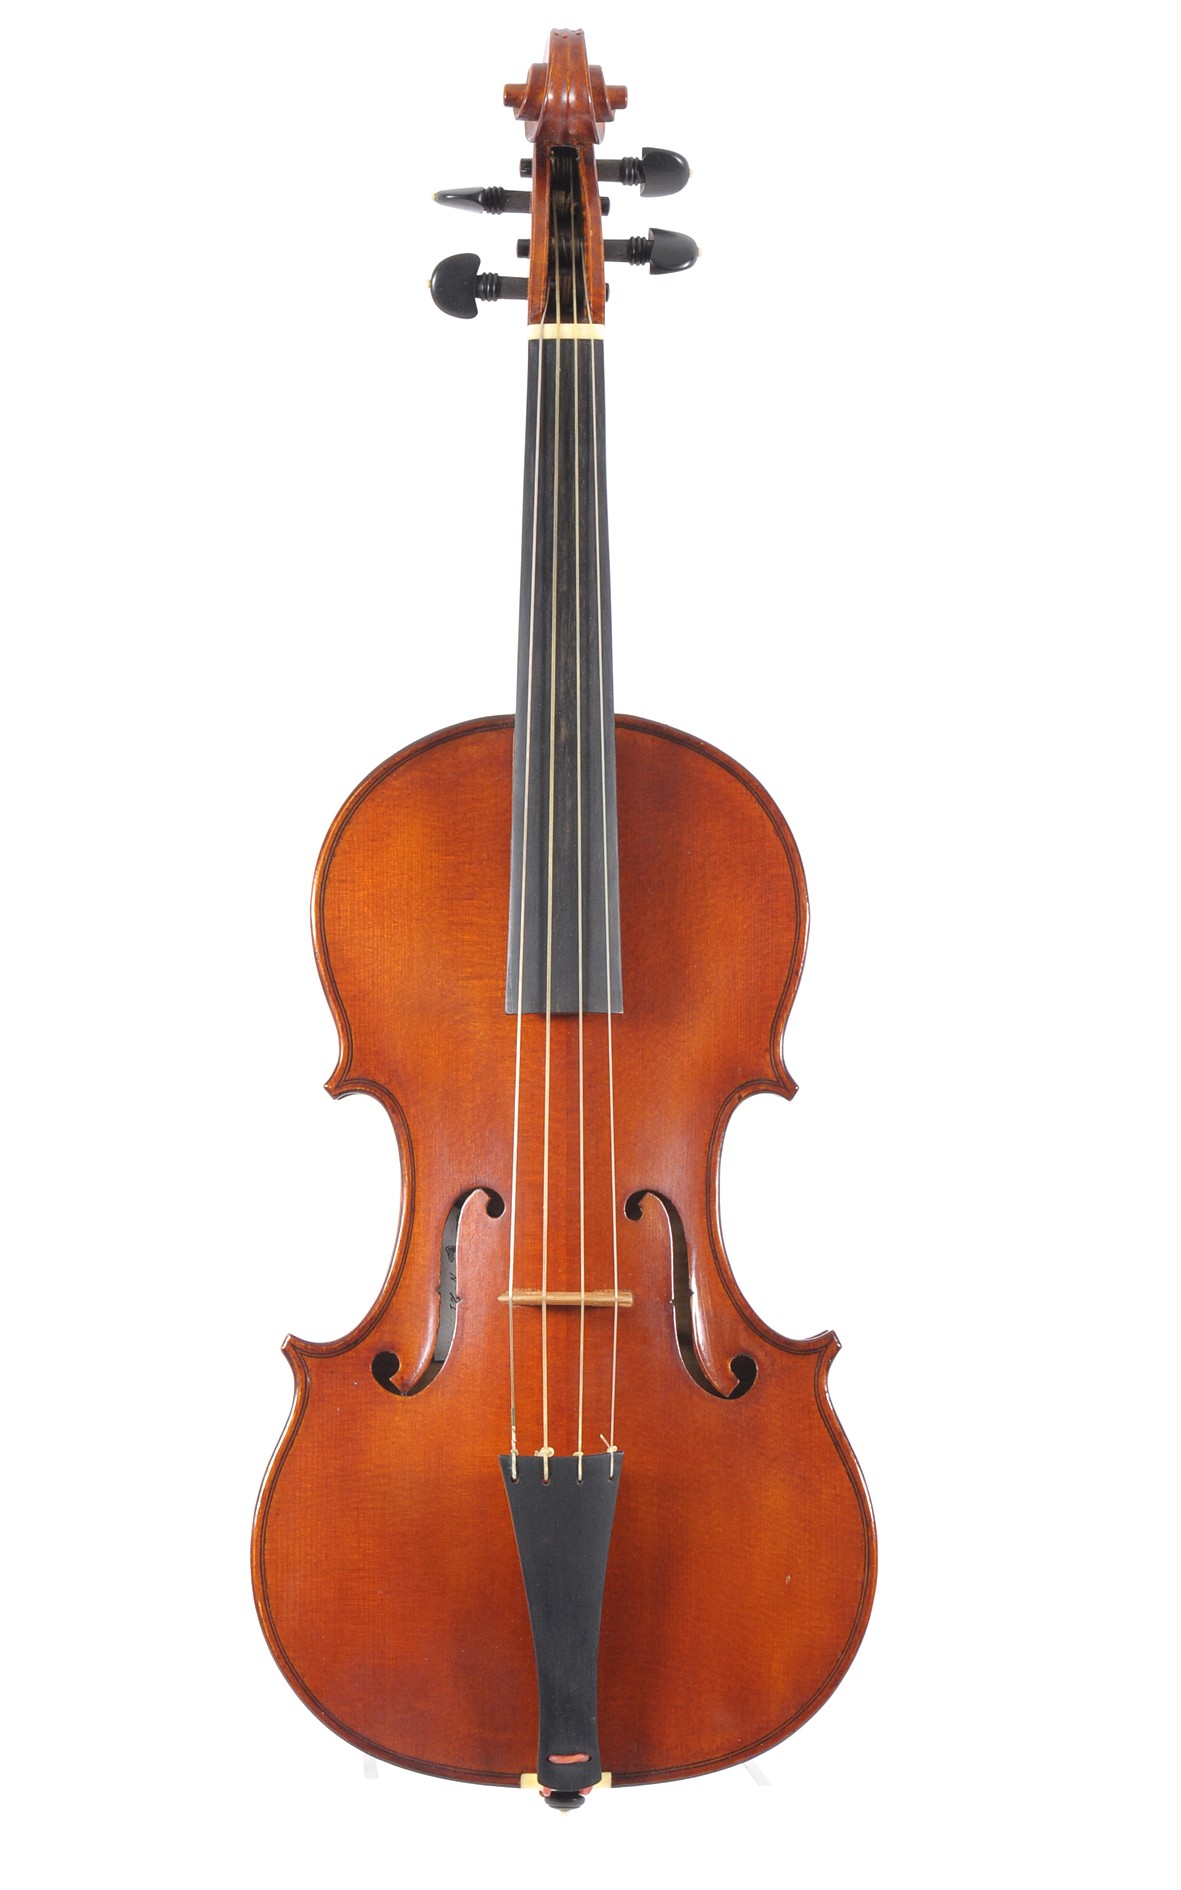 English baroque violin by J. P. Giddings, High Easter 2000 - top